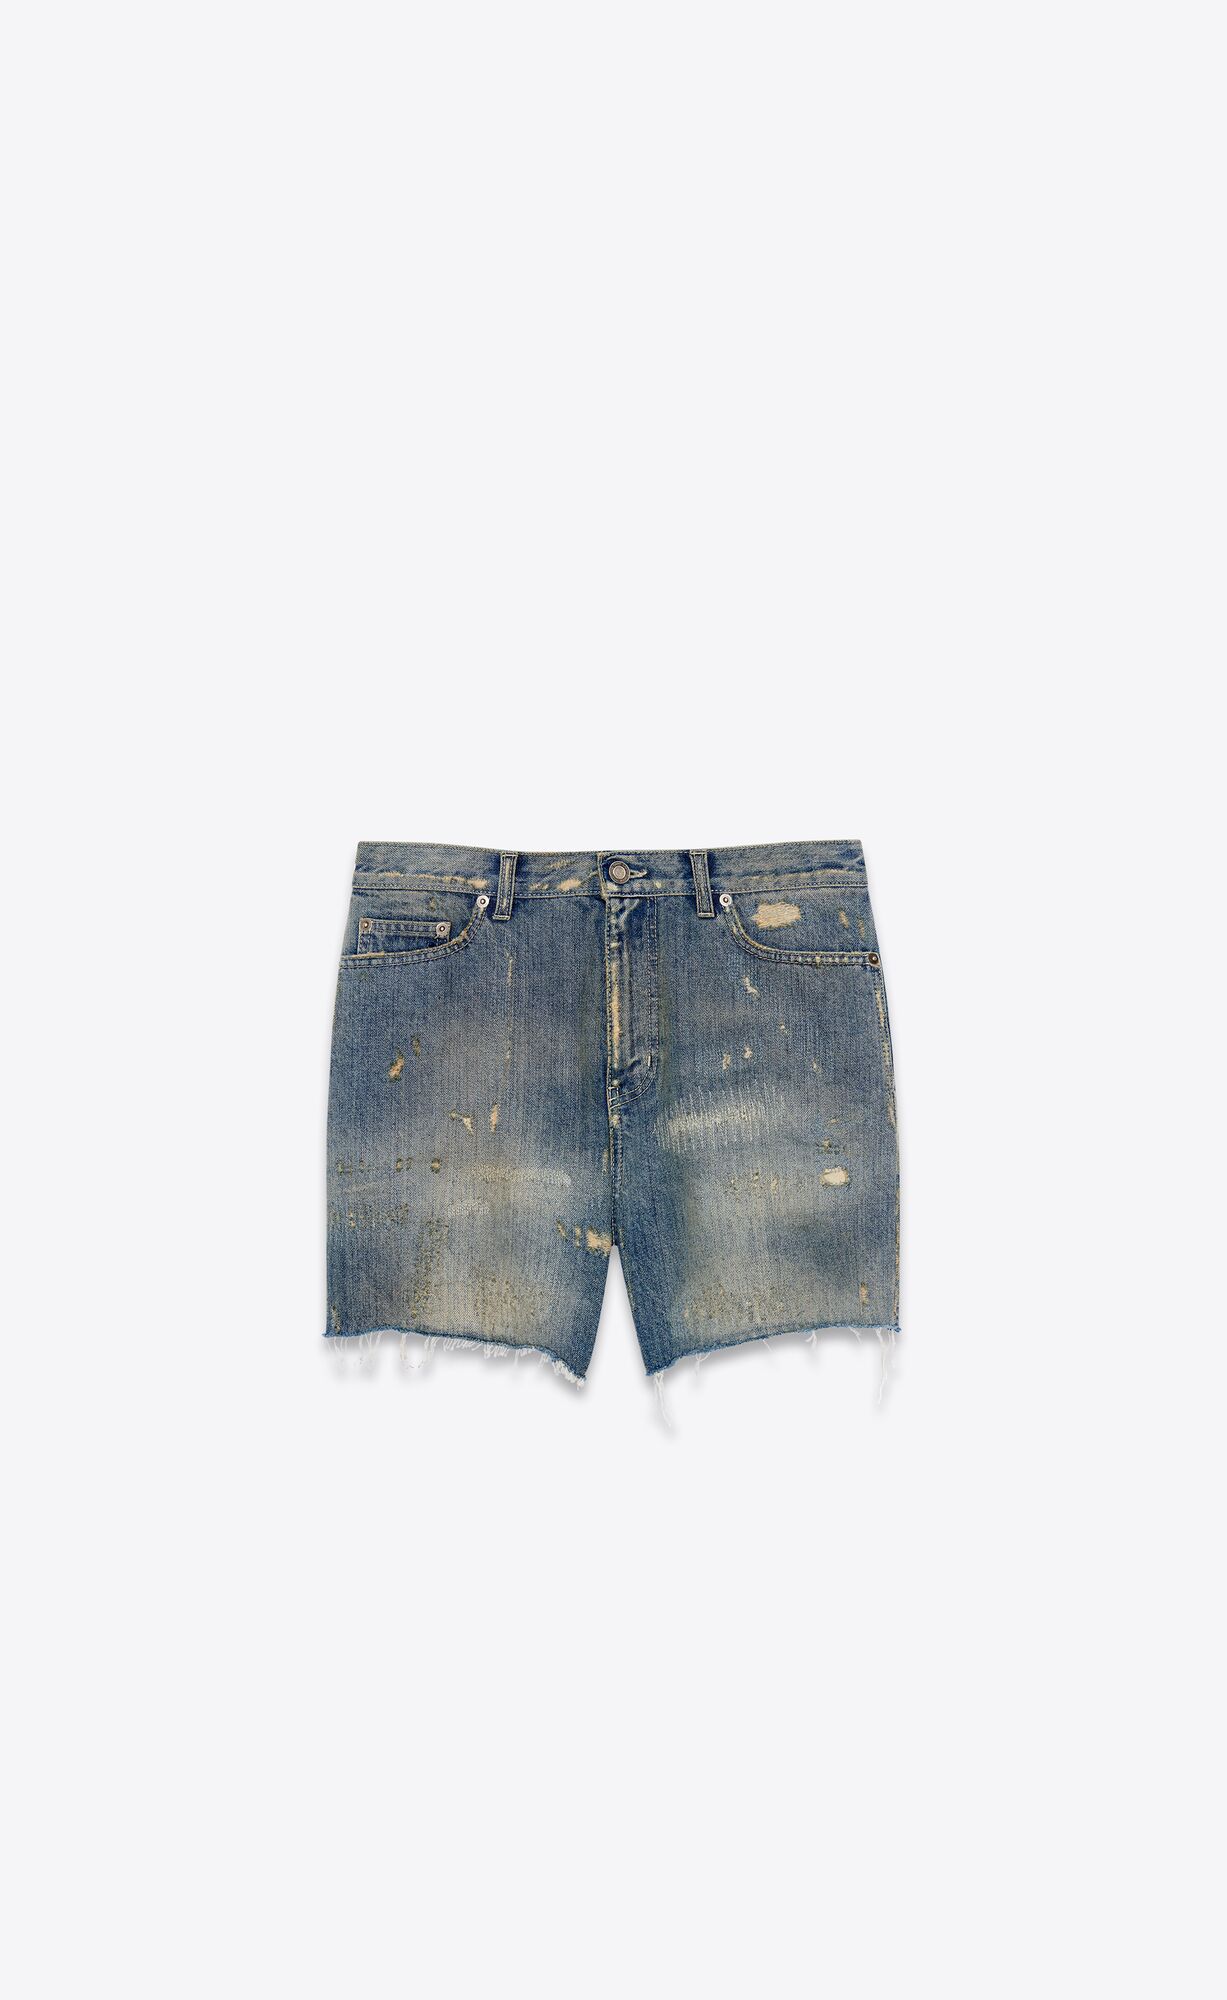 Mstyle Mens Pocket Fashion Rugged Summer Classic Denim Shorts Jeans 